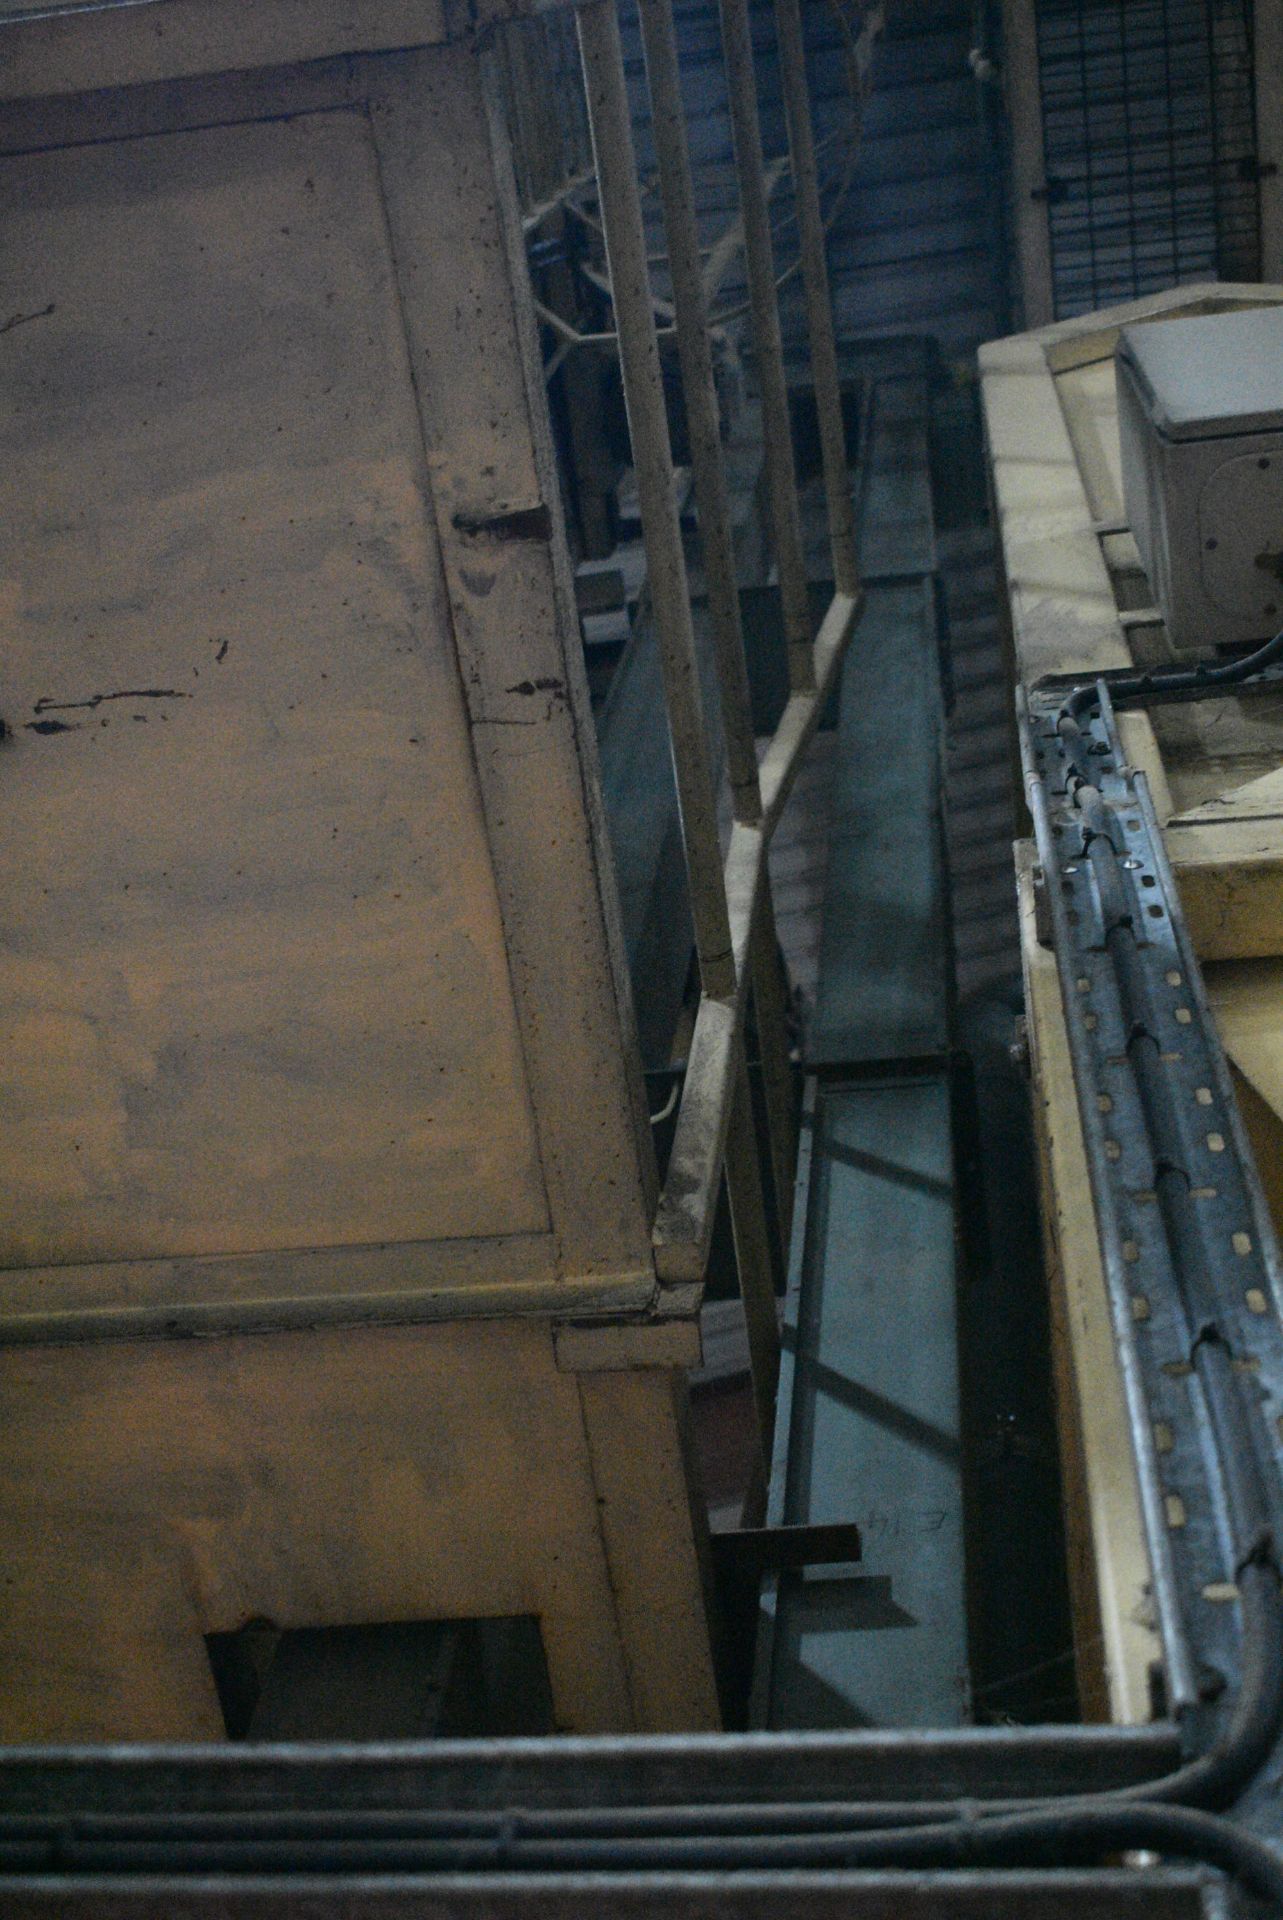 Carier BELT & BUCKET ELEVATOR, 270mm wide on leg s - Image 2 of 3